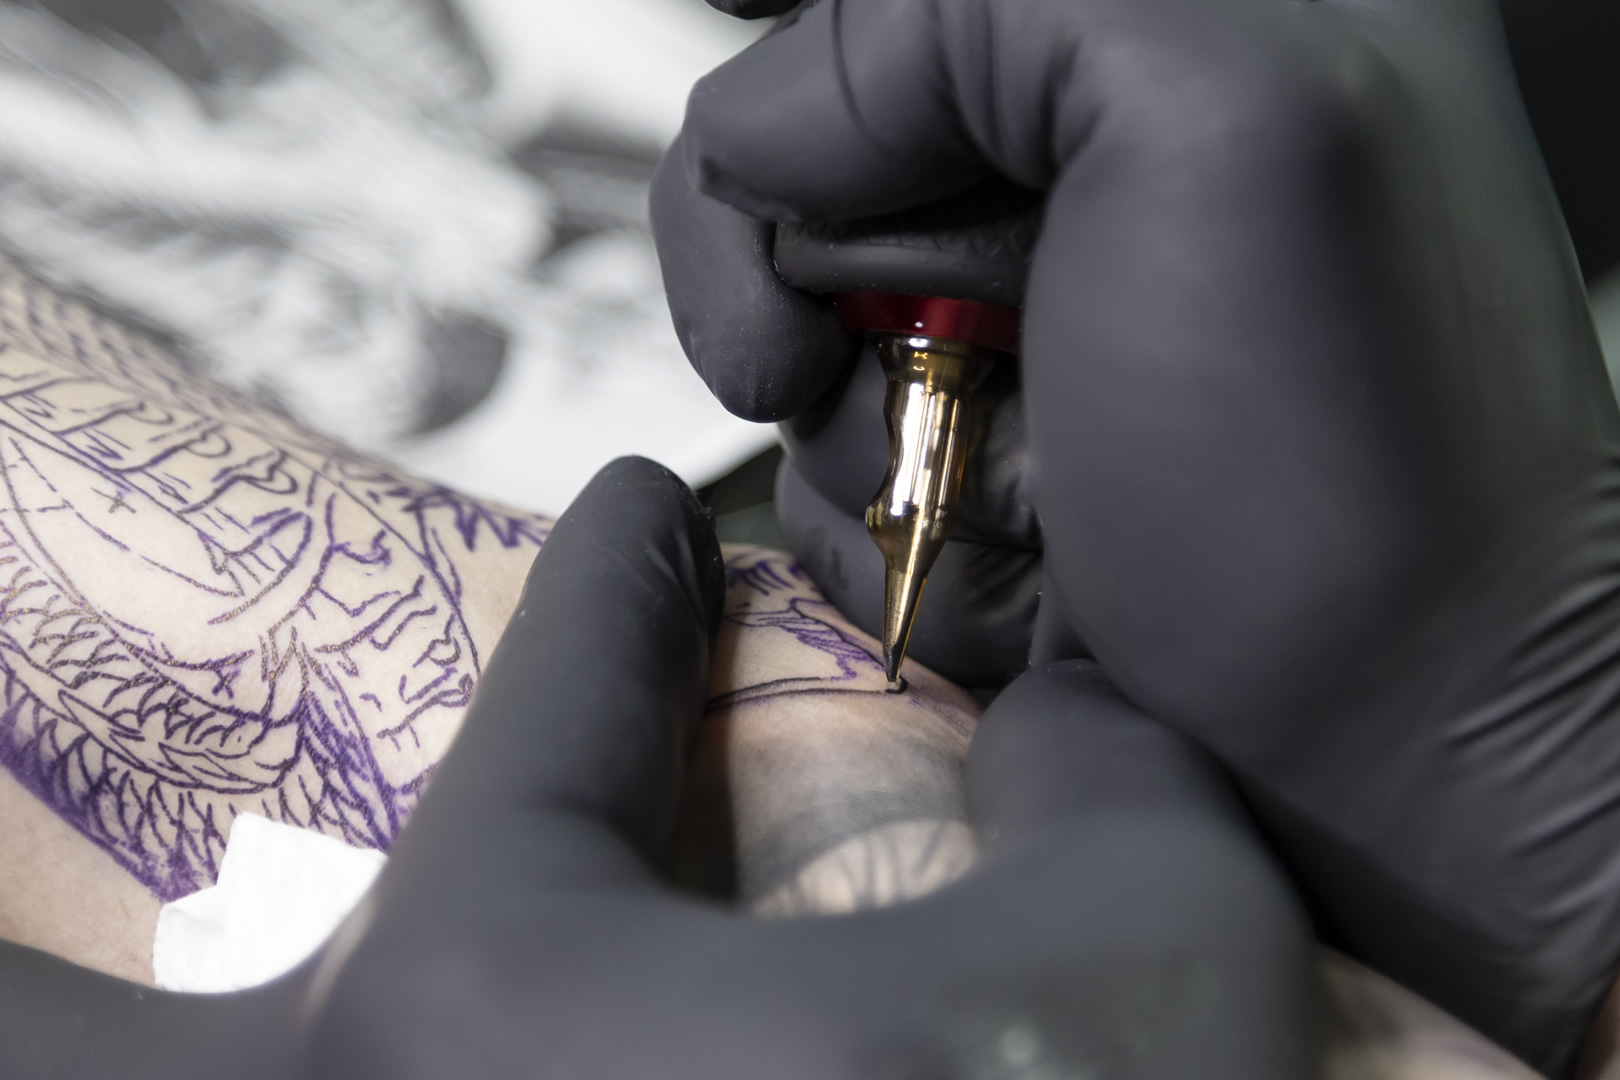 Tattoo Home - Coworking para tatuadores y alquiler de salas para el tatuaje profesional